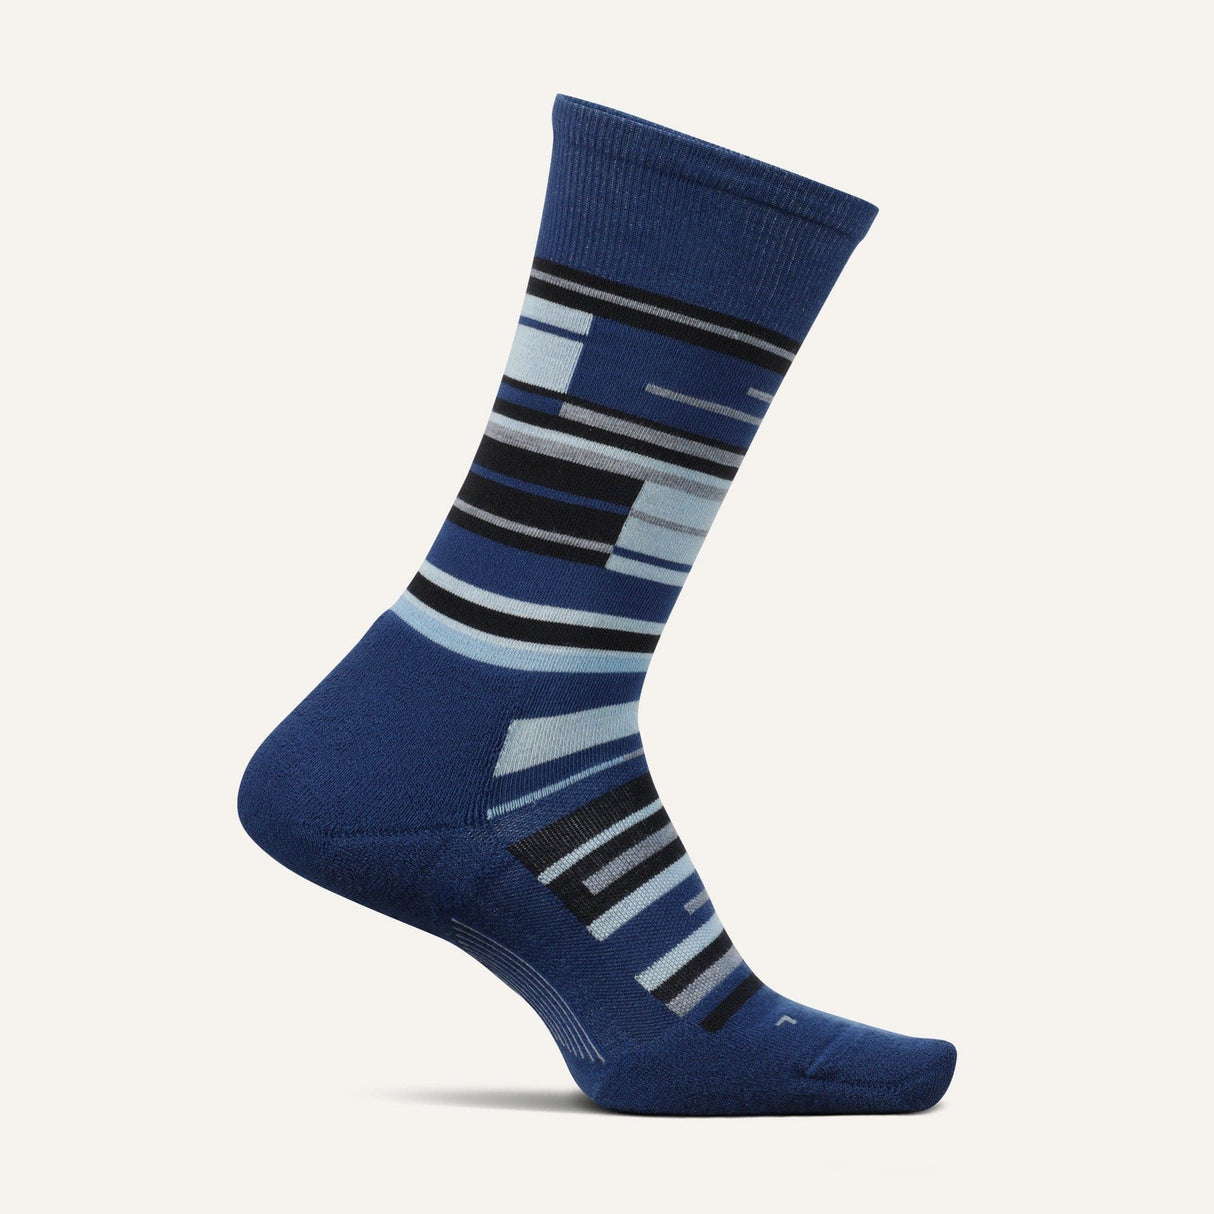 Feetures Mens Everyday Max Cushion Crew Socks  -  Small / Transit Blue